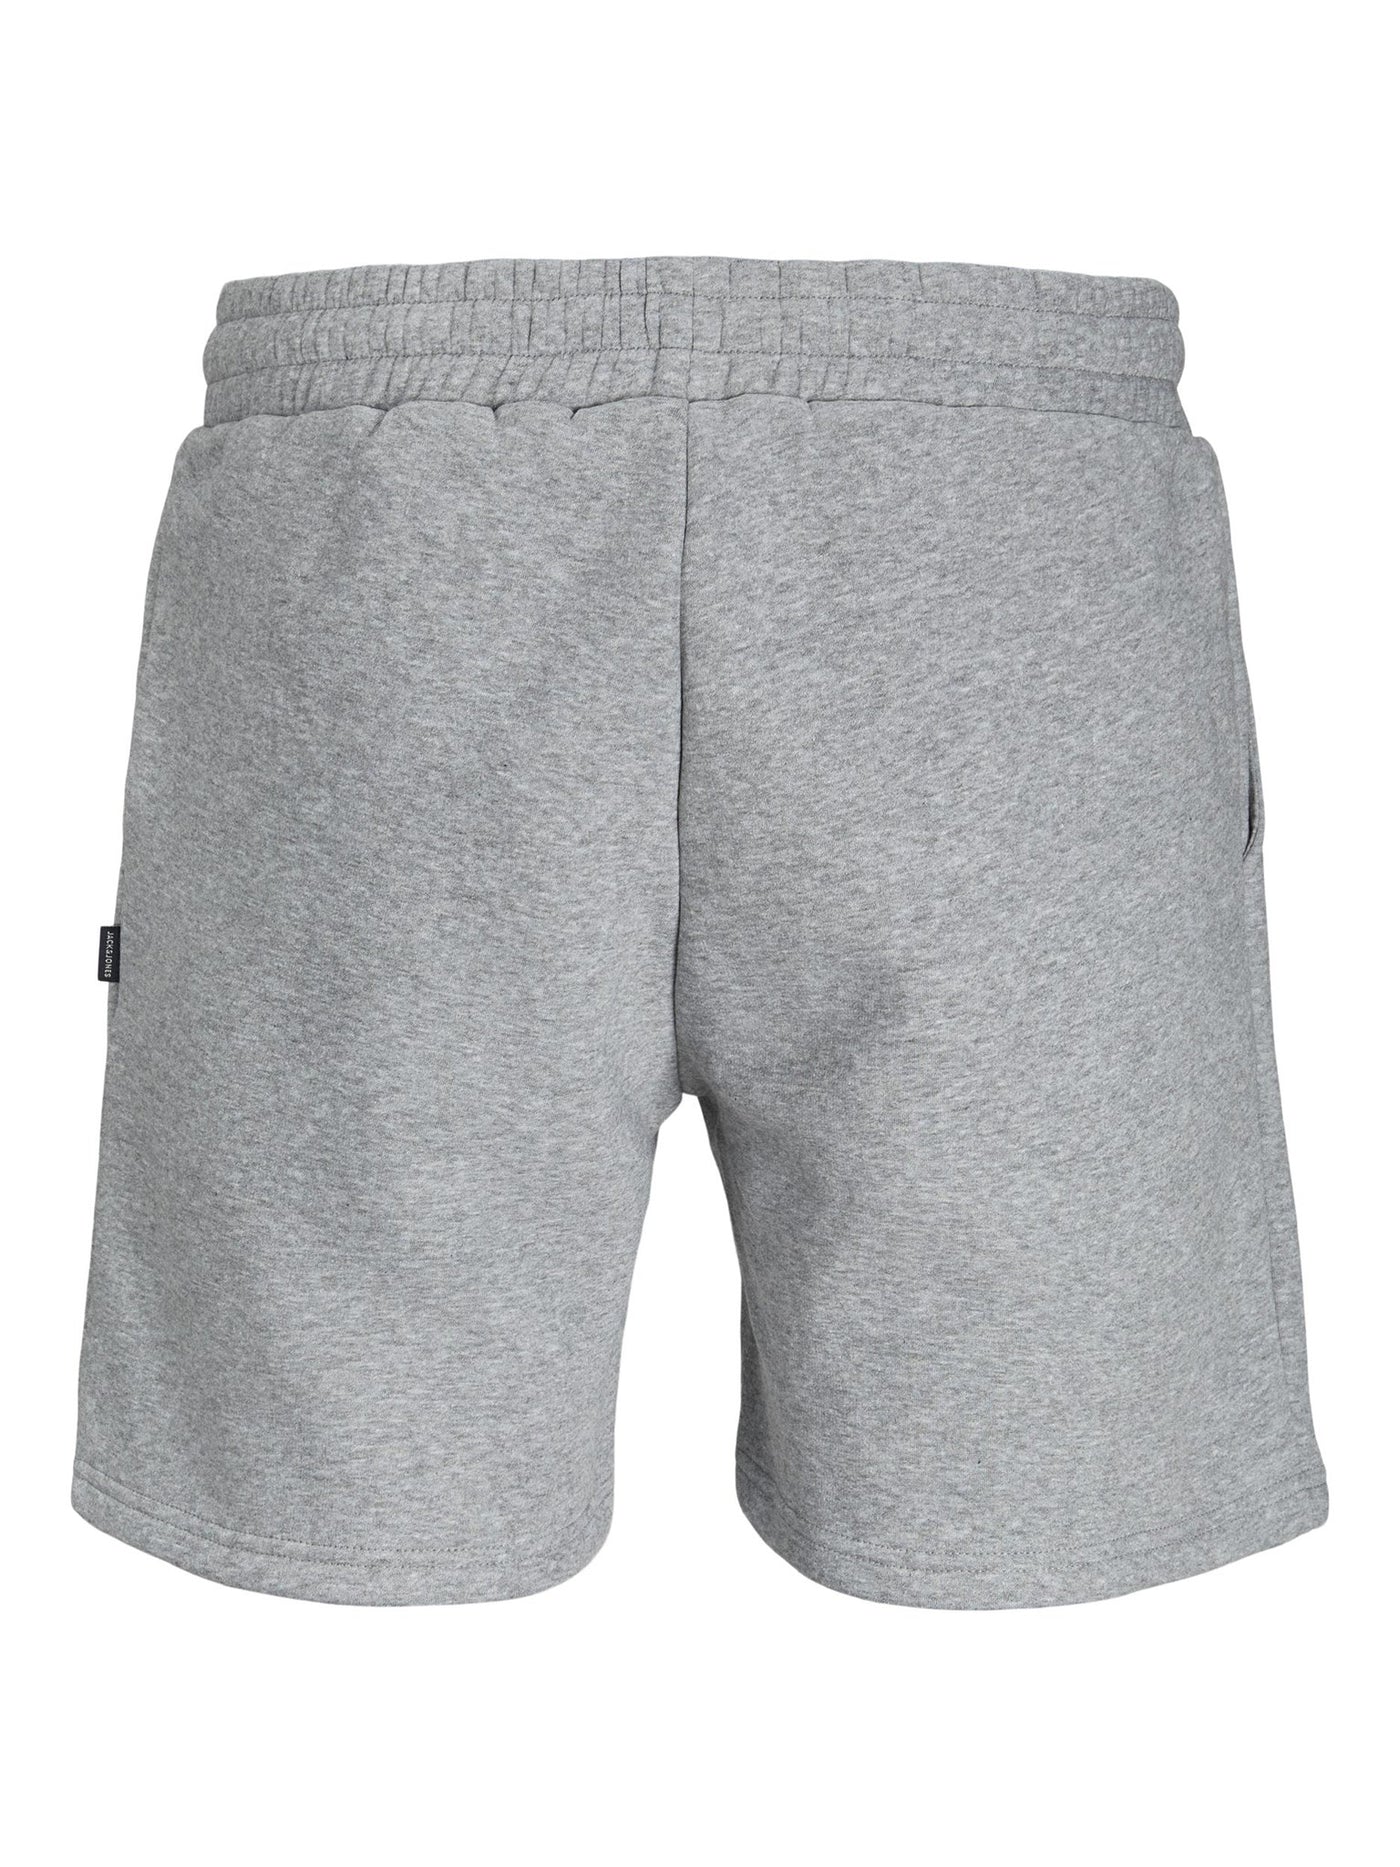 Star Sweat Shorts - Light Grey Melange - Jack & Jones - Grey 8